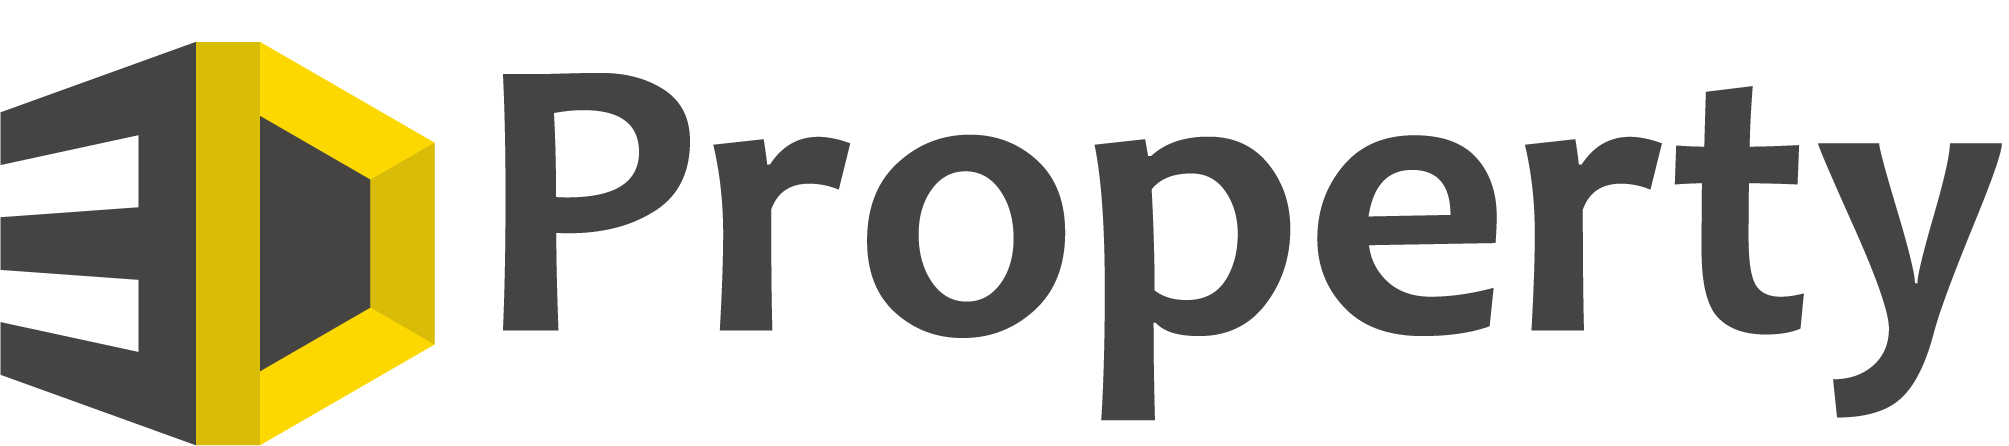 3D Property logo